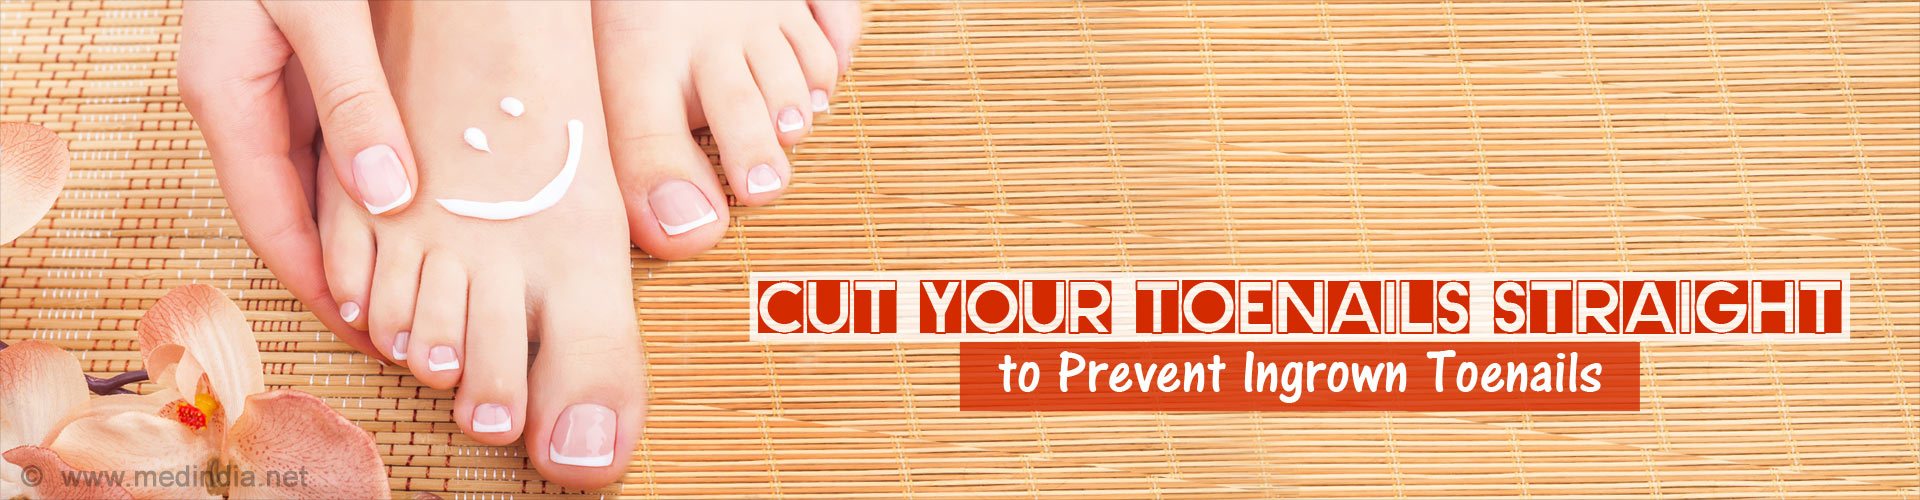 Cut your Toenails Straight to Prevent Ingrown Toenails